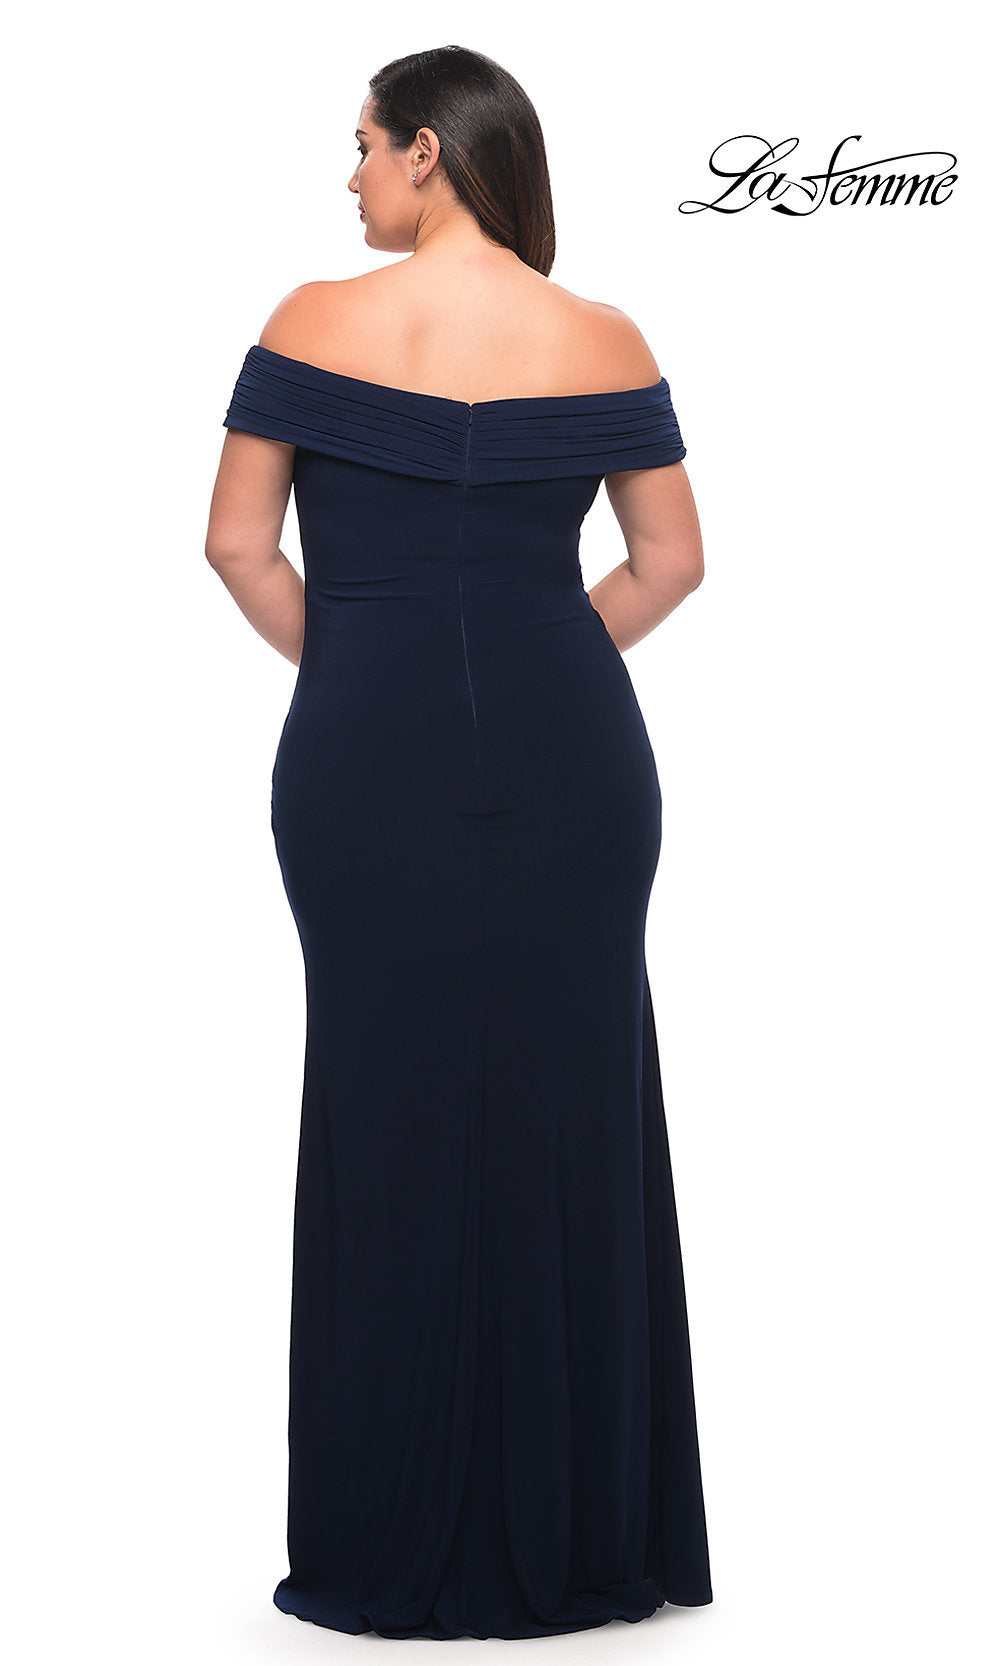  Plus-Size Navy Blue Long Prom Dress by La Femme